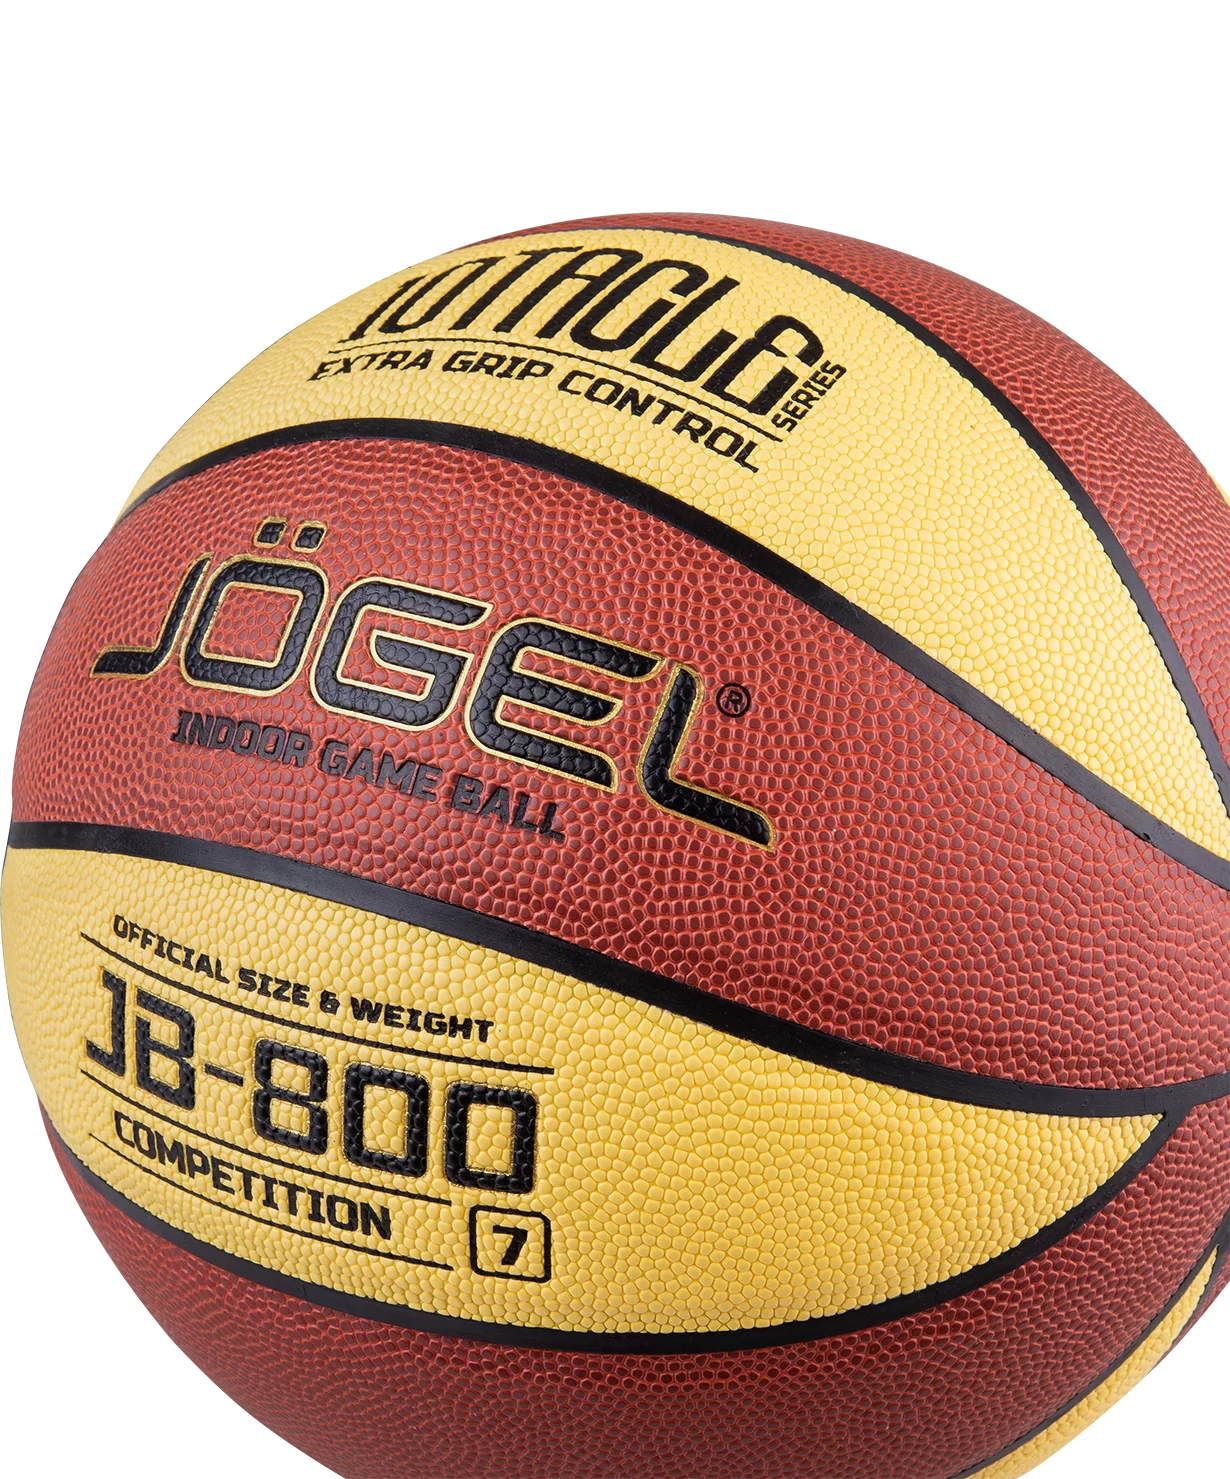 Фото Мяч баскетбольный Jogel JB-800 размер №7 18778 со склада магазина СпортЕВ